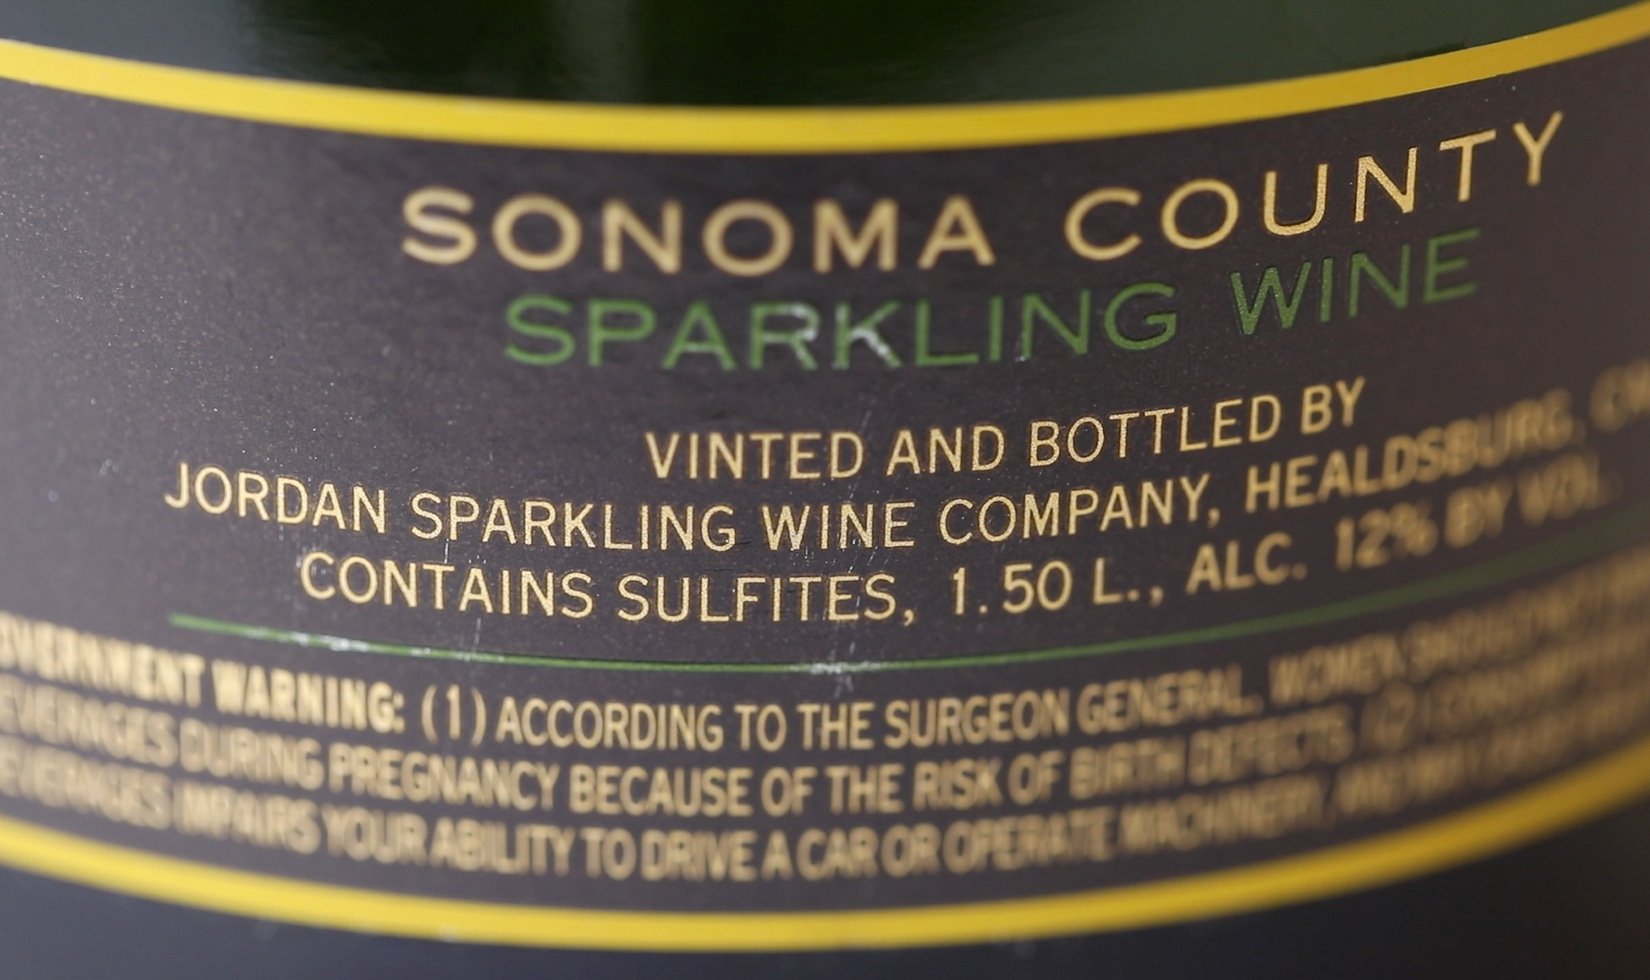 J by Jordan sparkling wine company back label